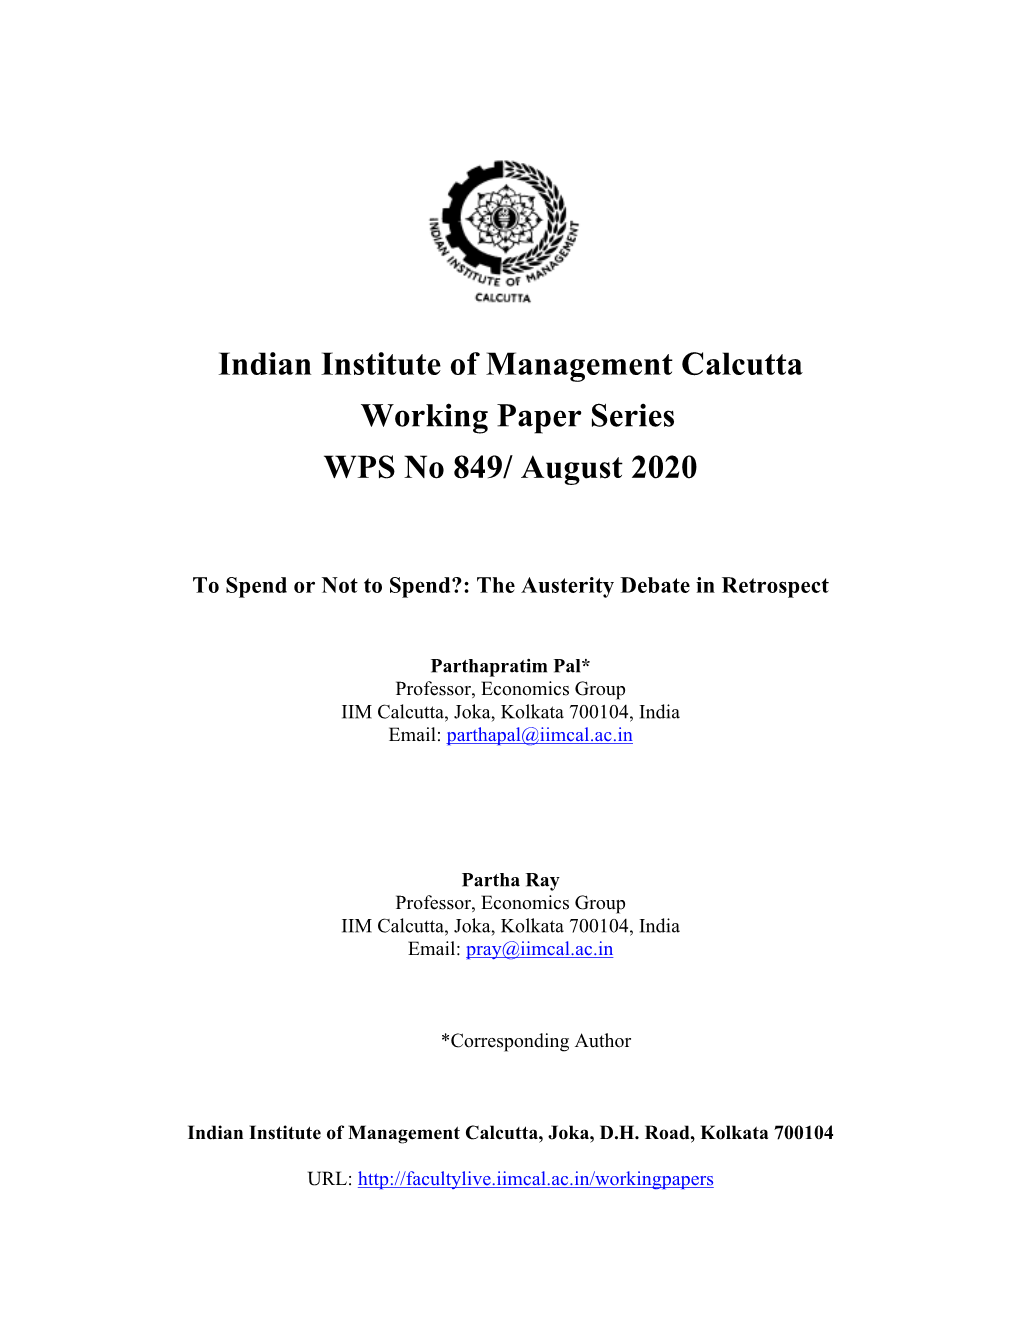 Indian Institute of Management Calcutta Working Paper Series WPS No 849/ August 2020